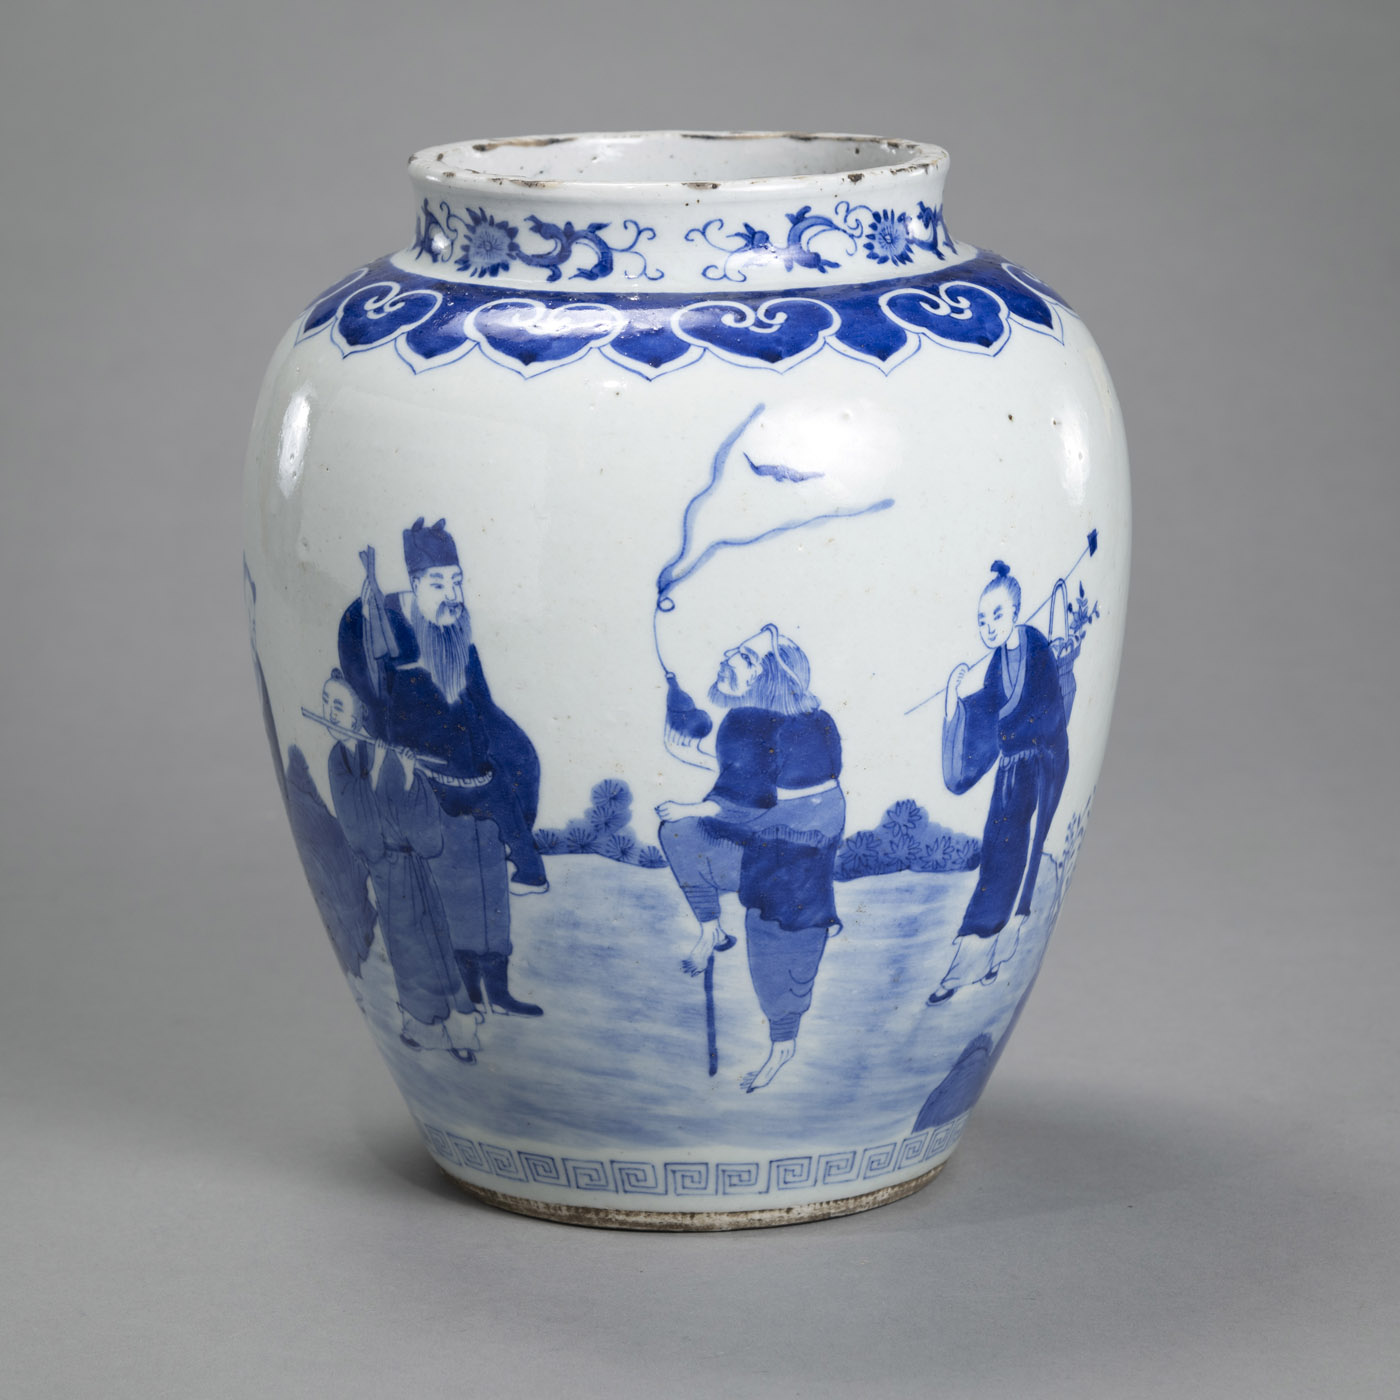 <b>A PORCELAIN JAR WITH UNDERGLAZE BLUE DECORATION OF THE EIGHT IMMORTALS</b>